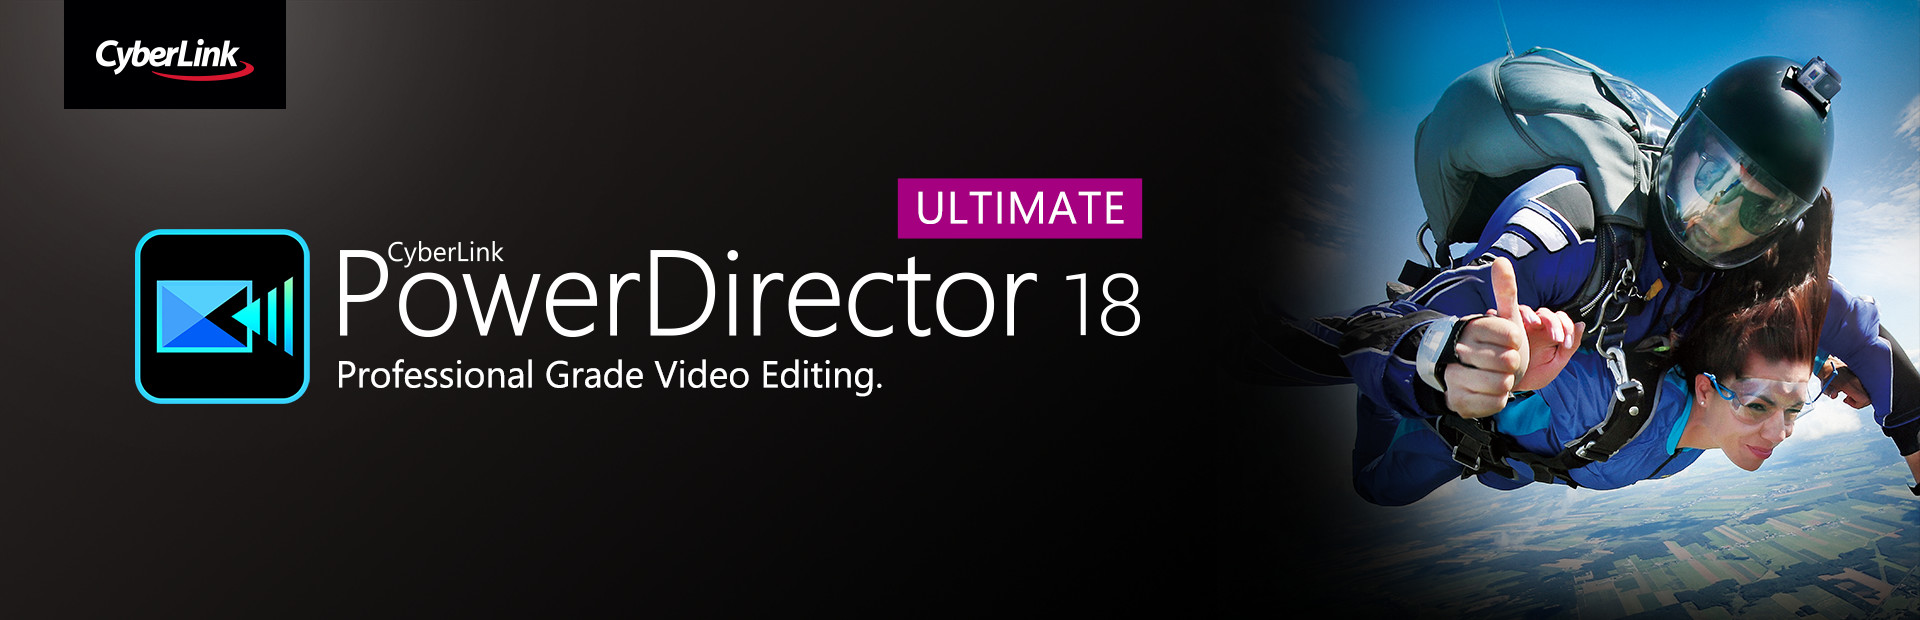 CyberLink PowerDirector 18 Ultimate - Video editing, Video editor, making videos cover image